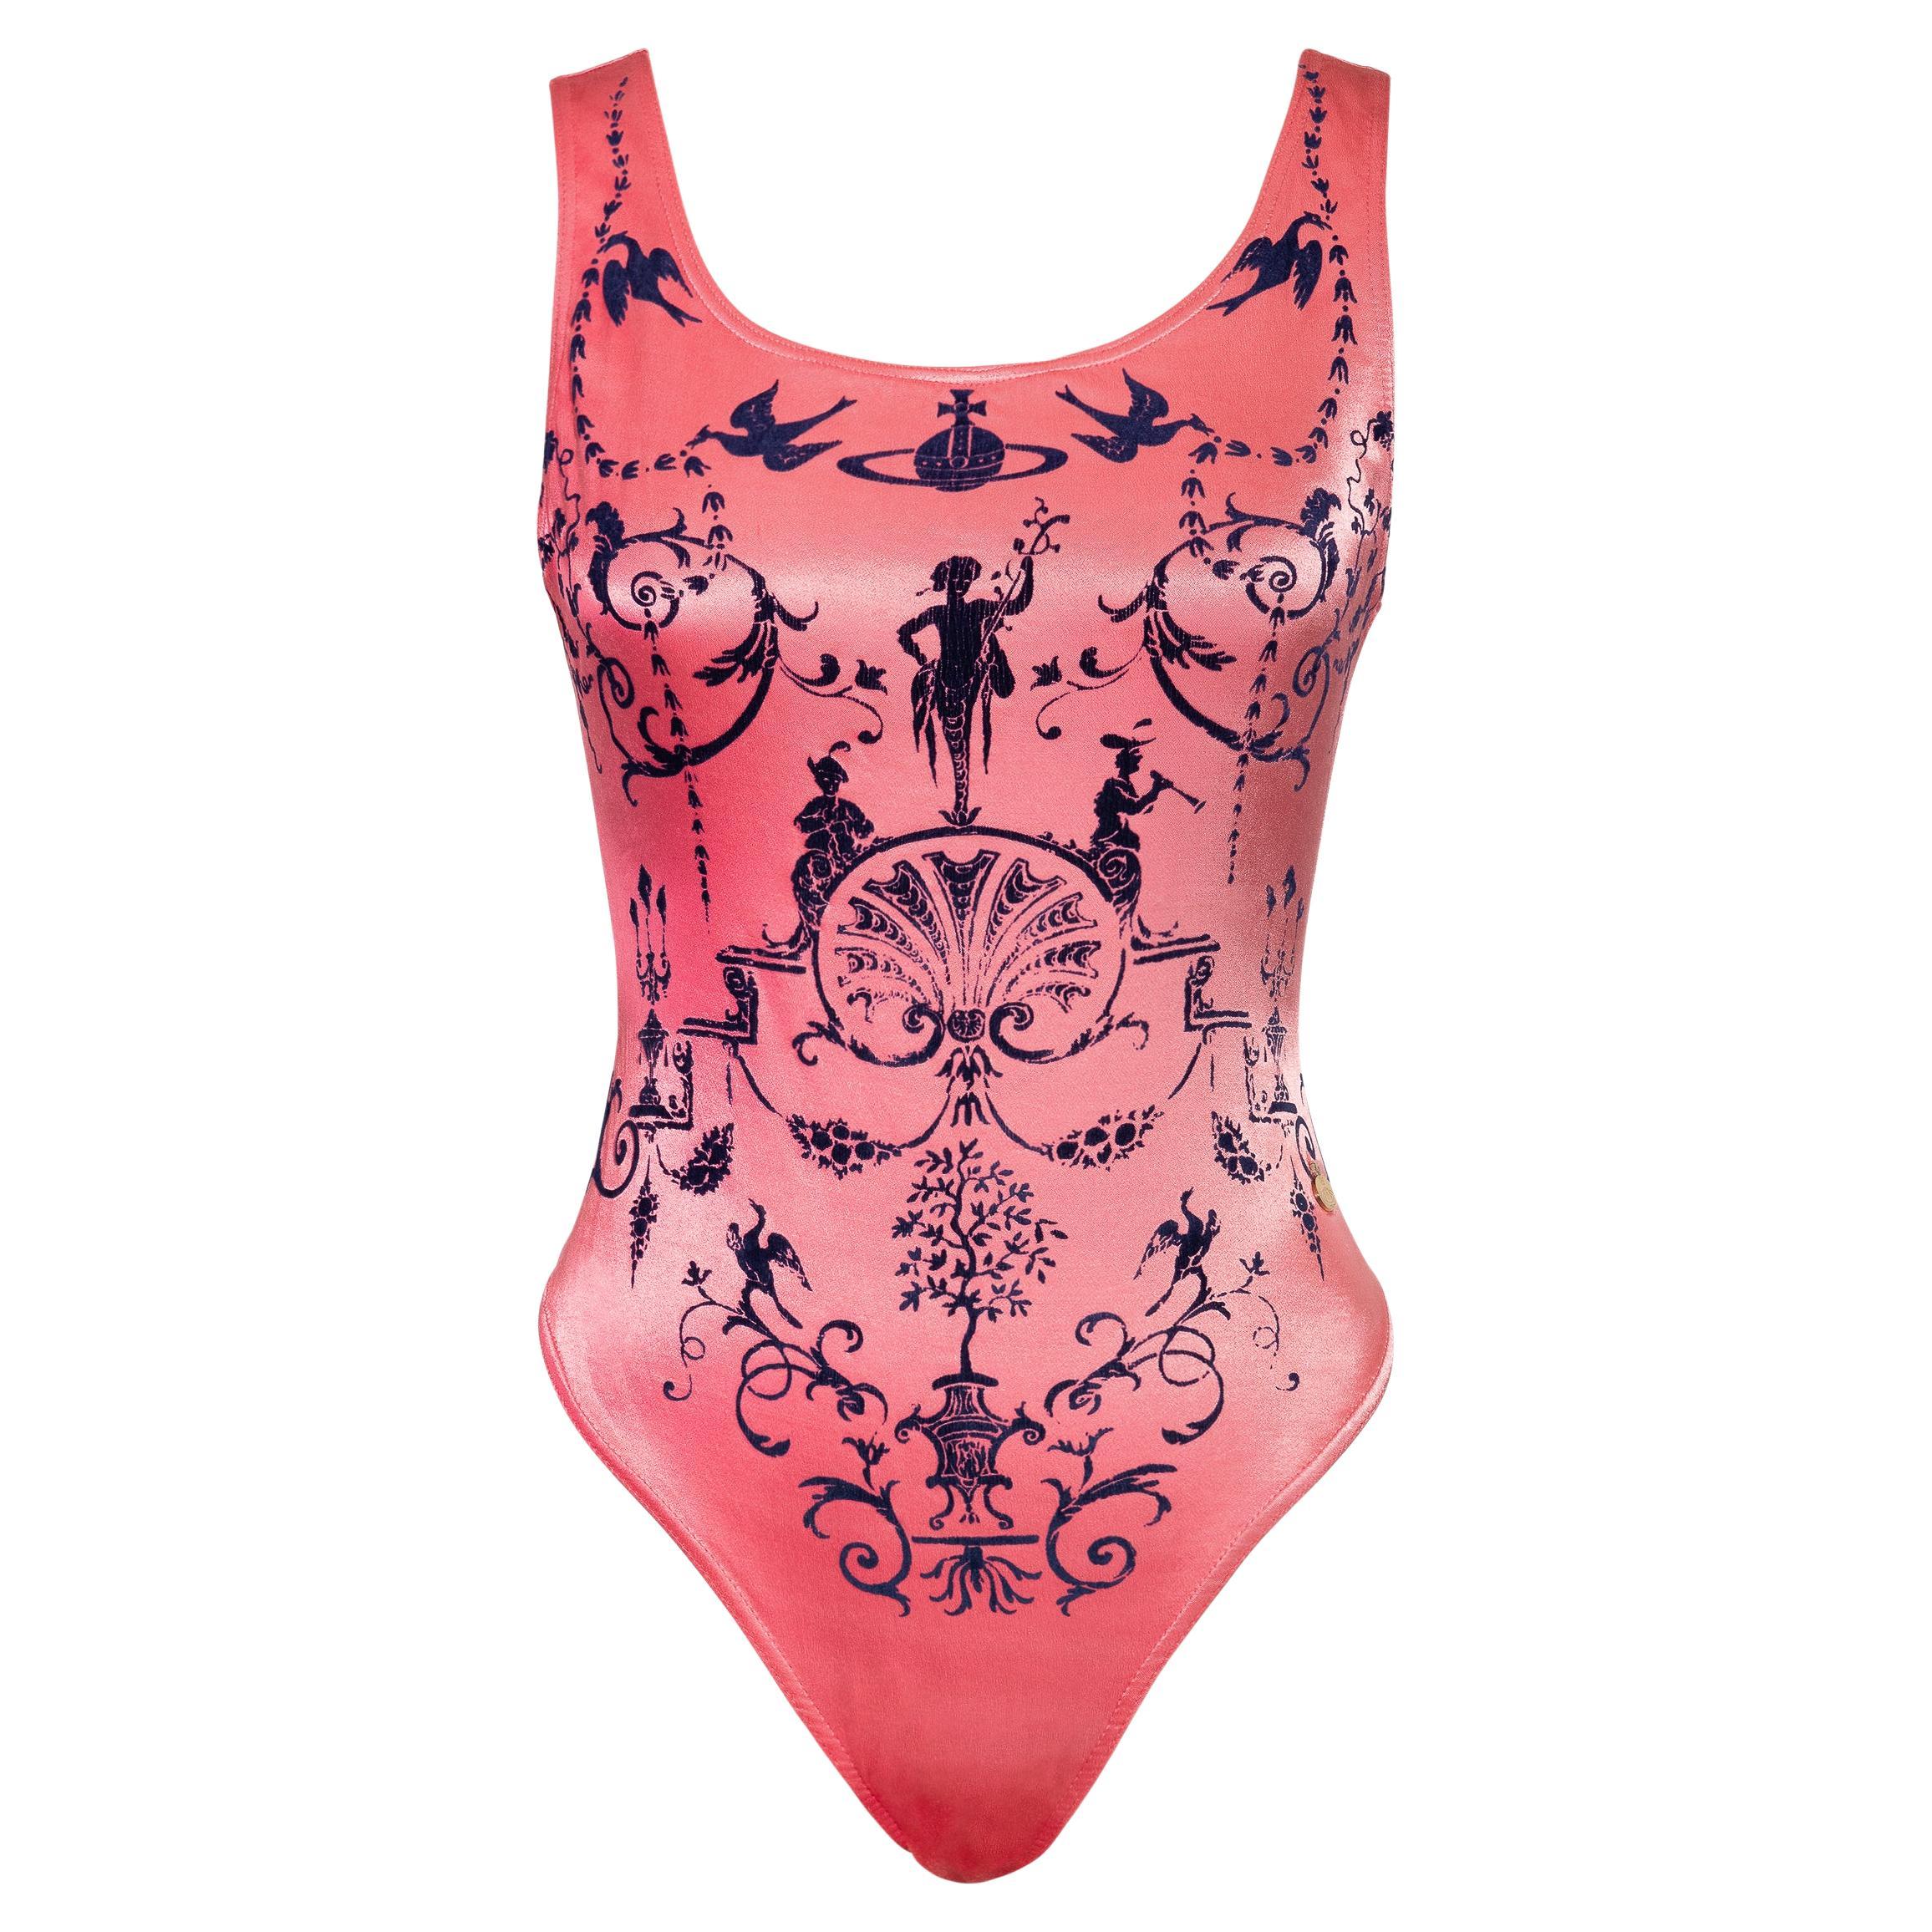 S/S 1992 Vivienne Westwood Pink Boulle Print Voided Velvet Bodysuit